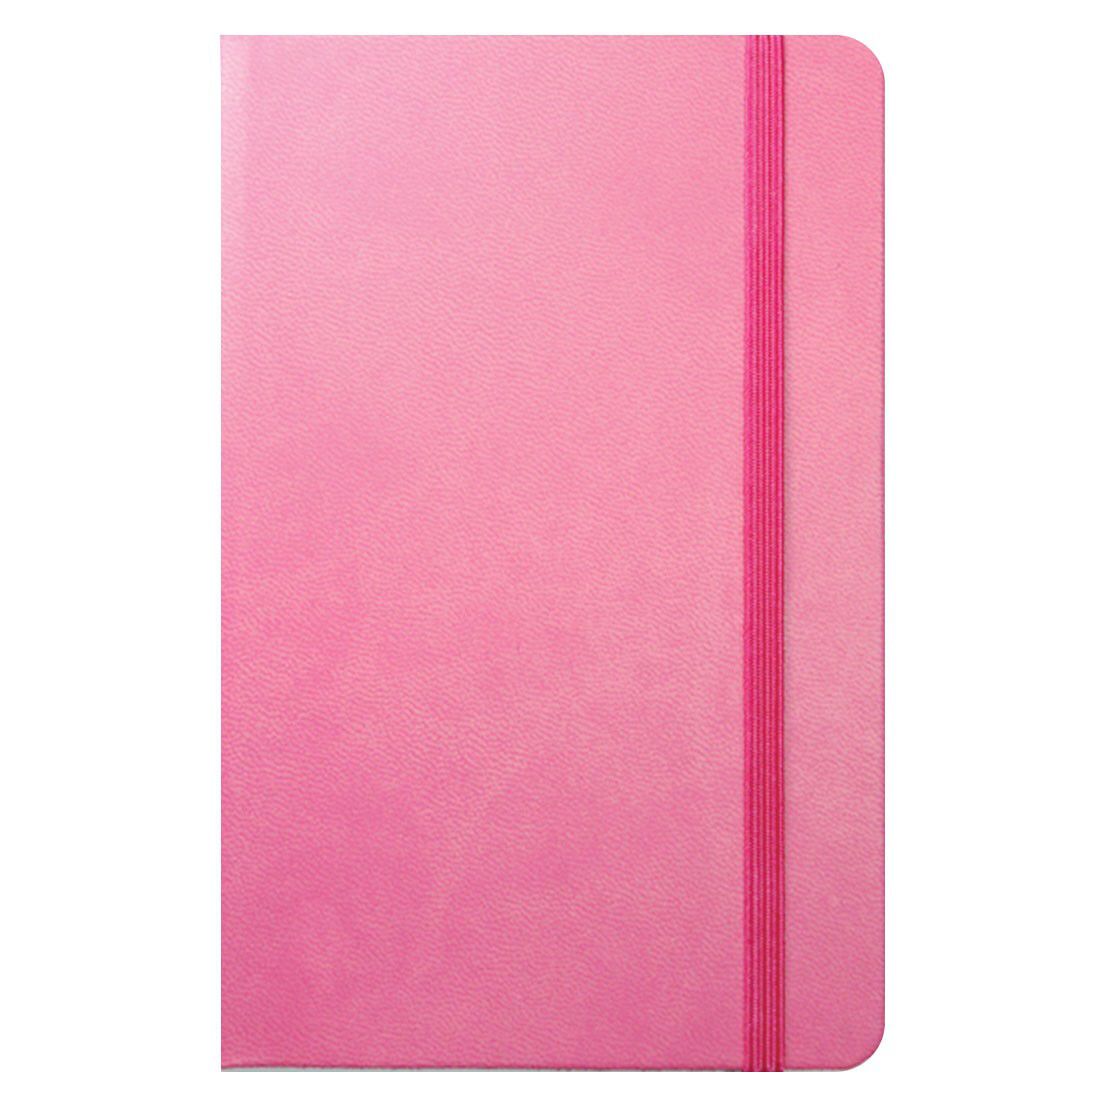 Flexi Pocket Ruled Notebook - Pink